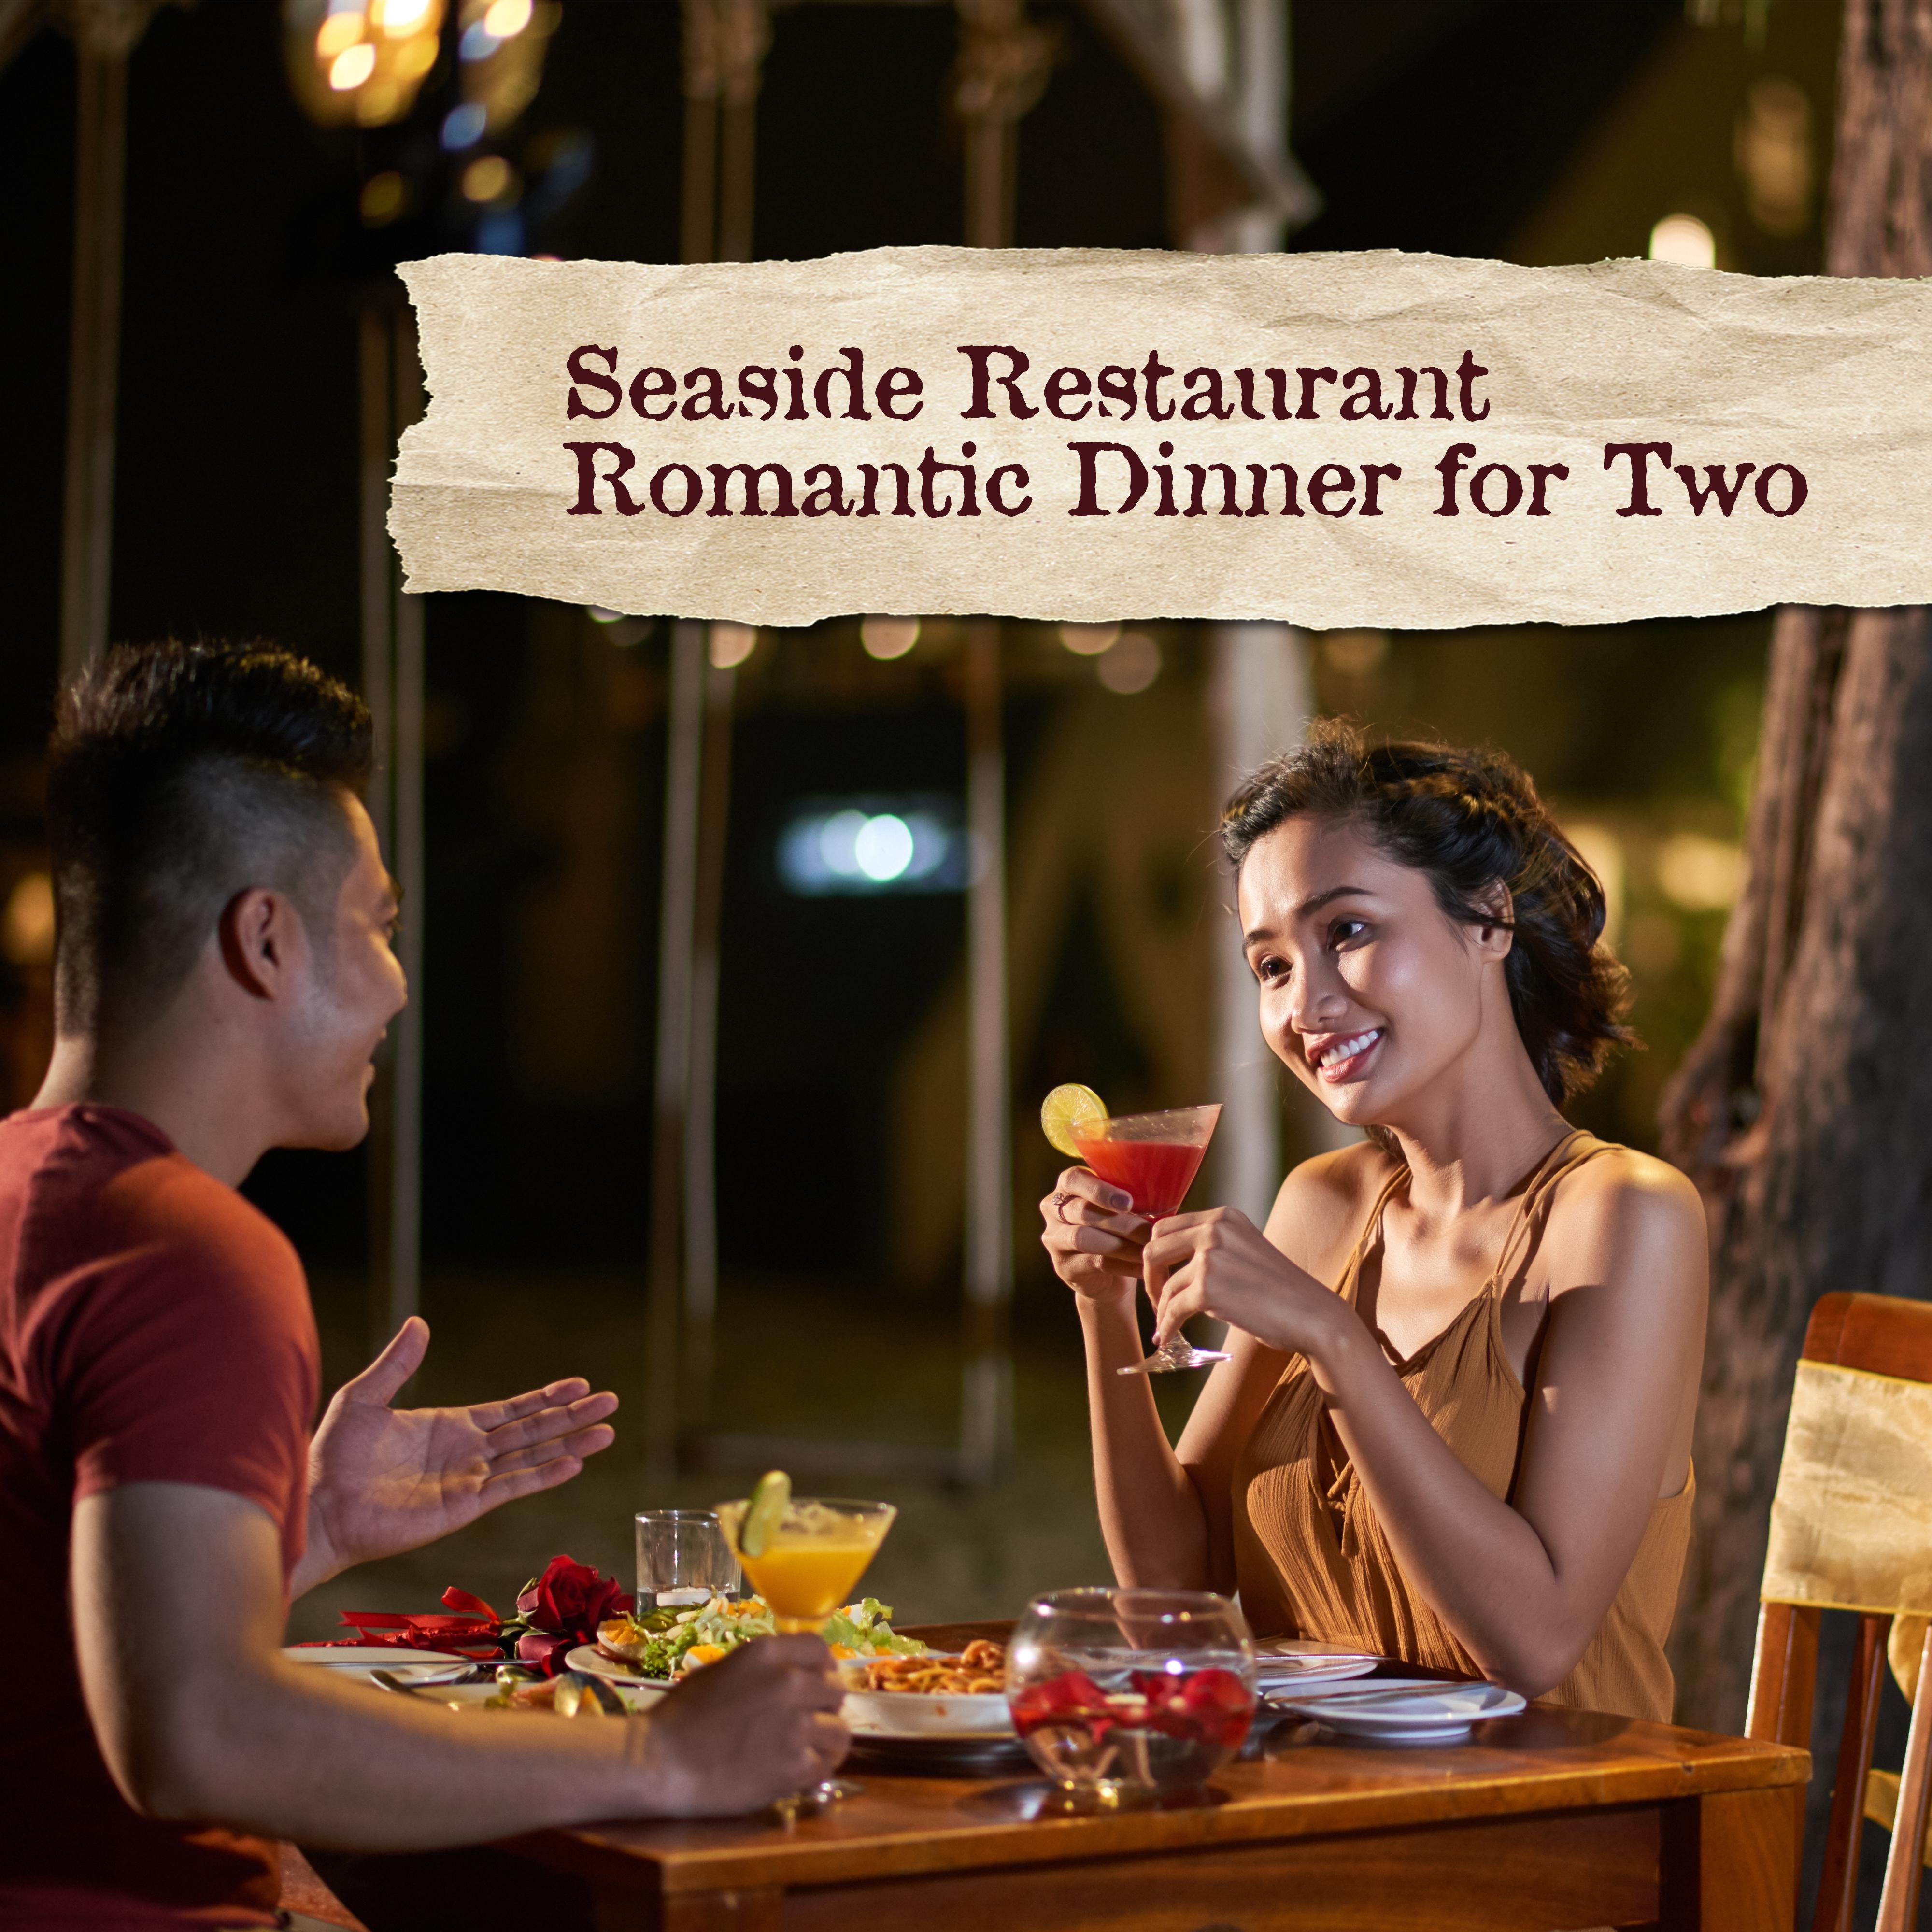 Seaside Restaurant Romantic Dinner for Two – Instrumental Smooth Jazz Sentimental Music for Good Time Together